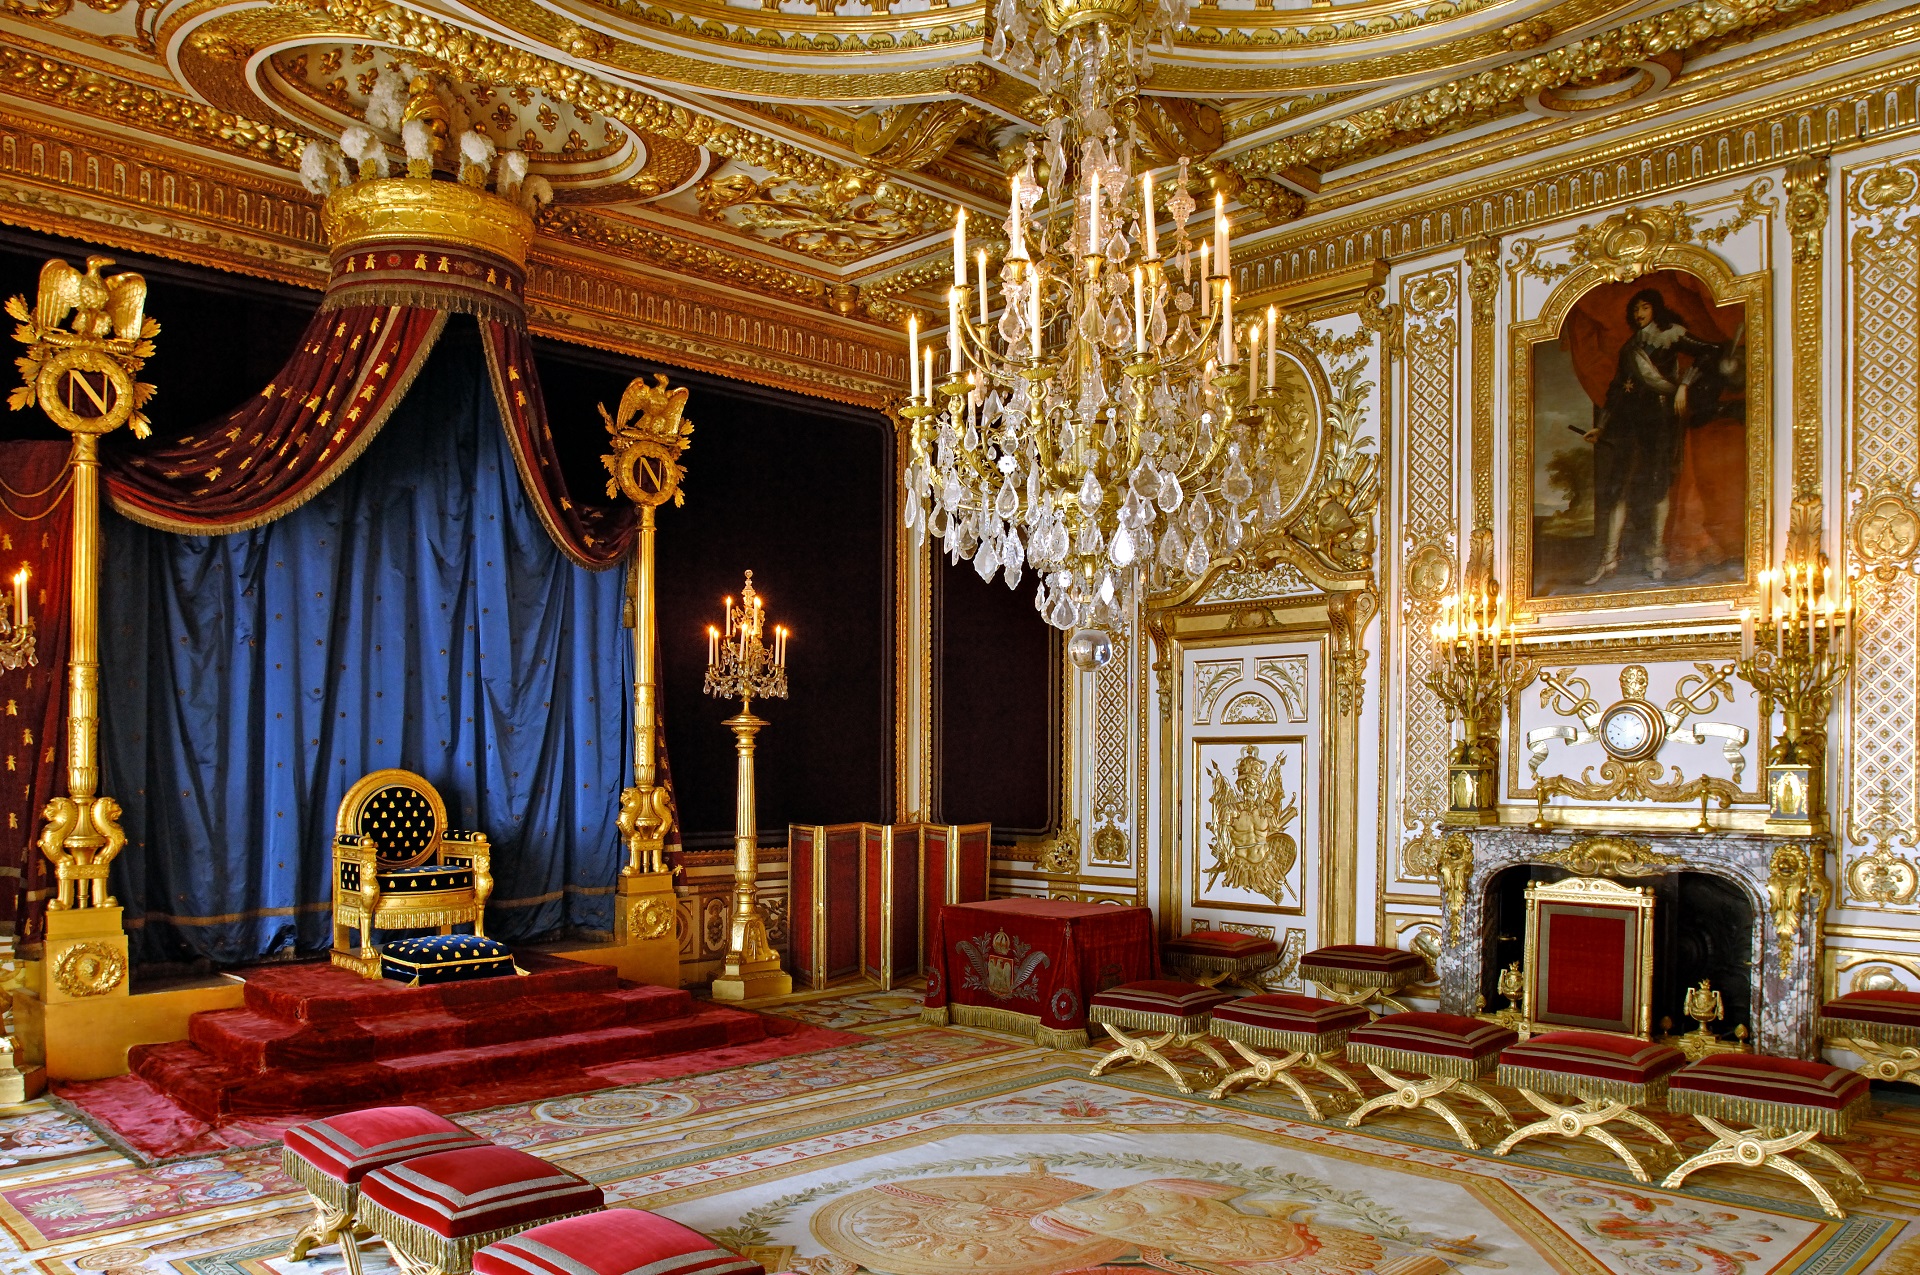 The palace of Napoleon I - Château de Fontainebleau